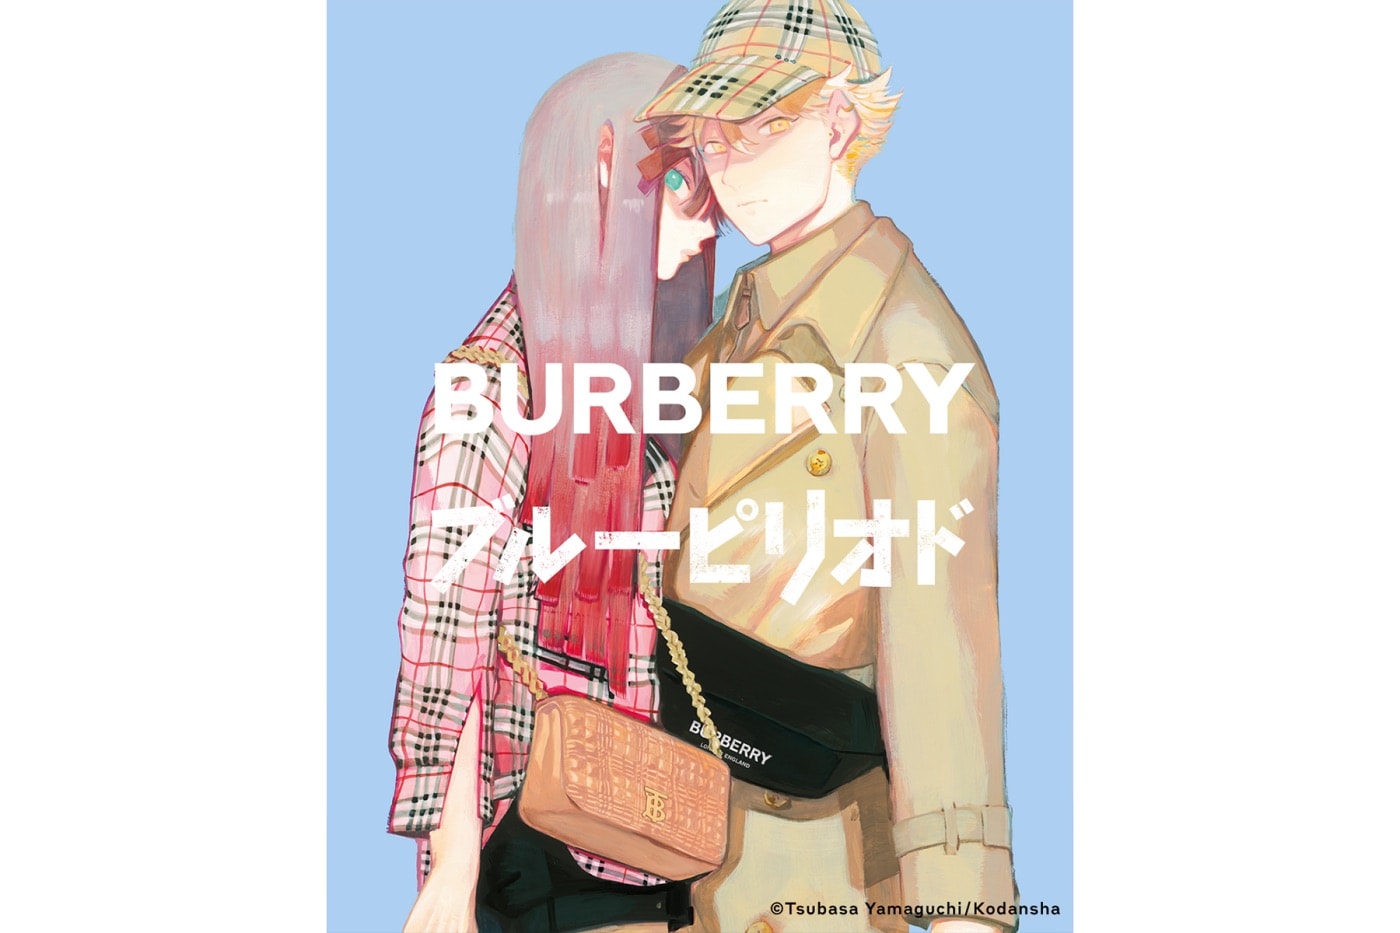 Burberry 宣布携手《蓝色时期 Blue Period》推出合作漫画